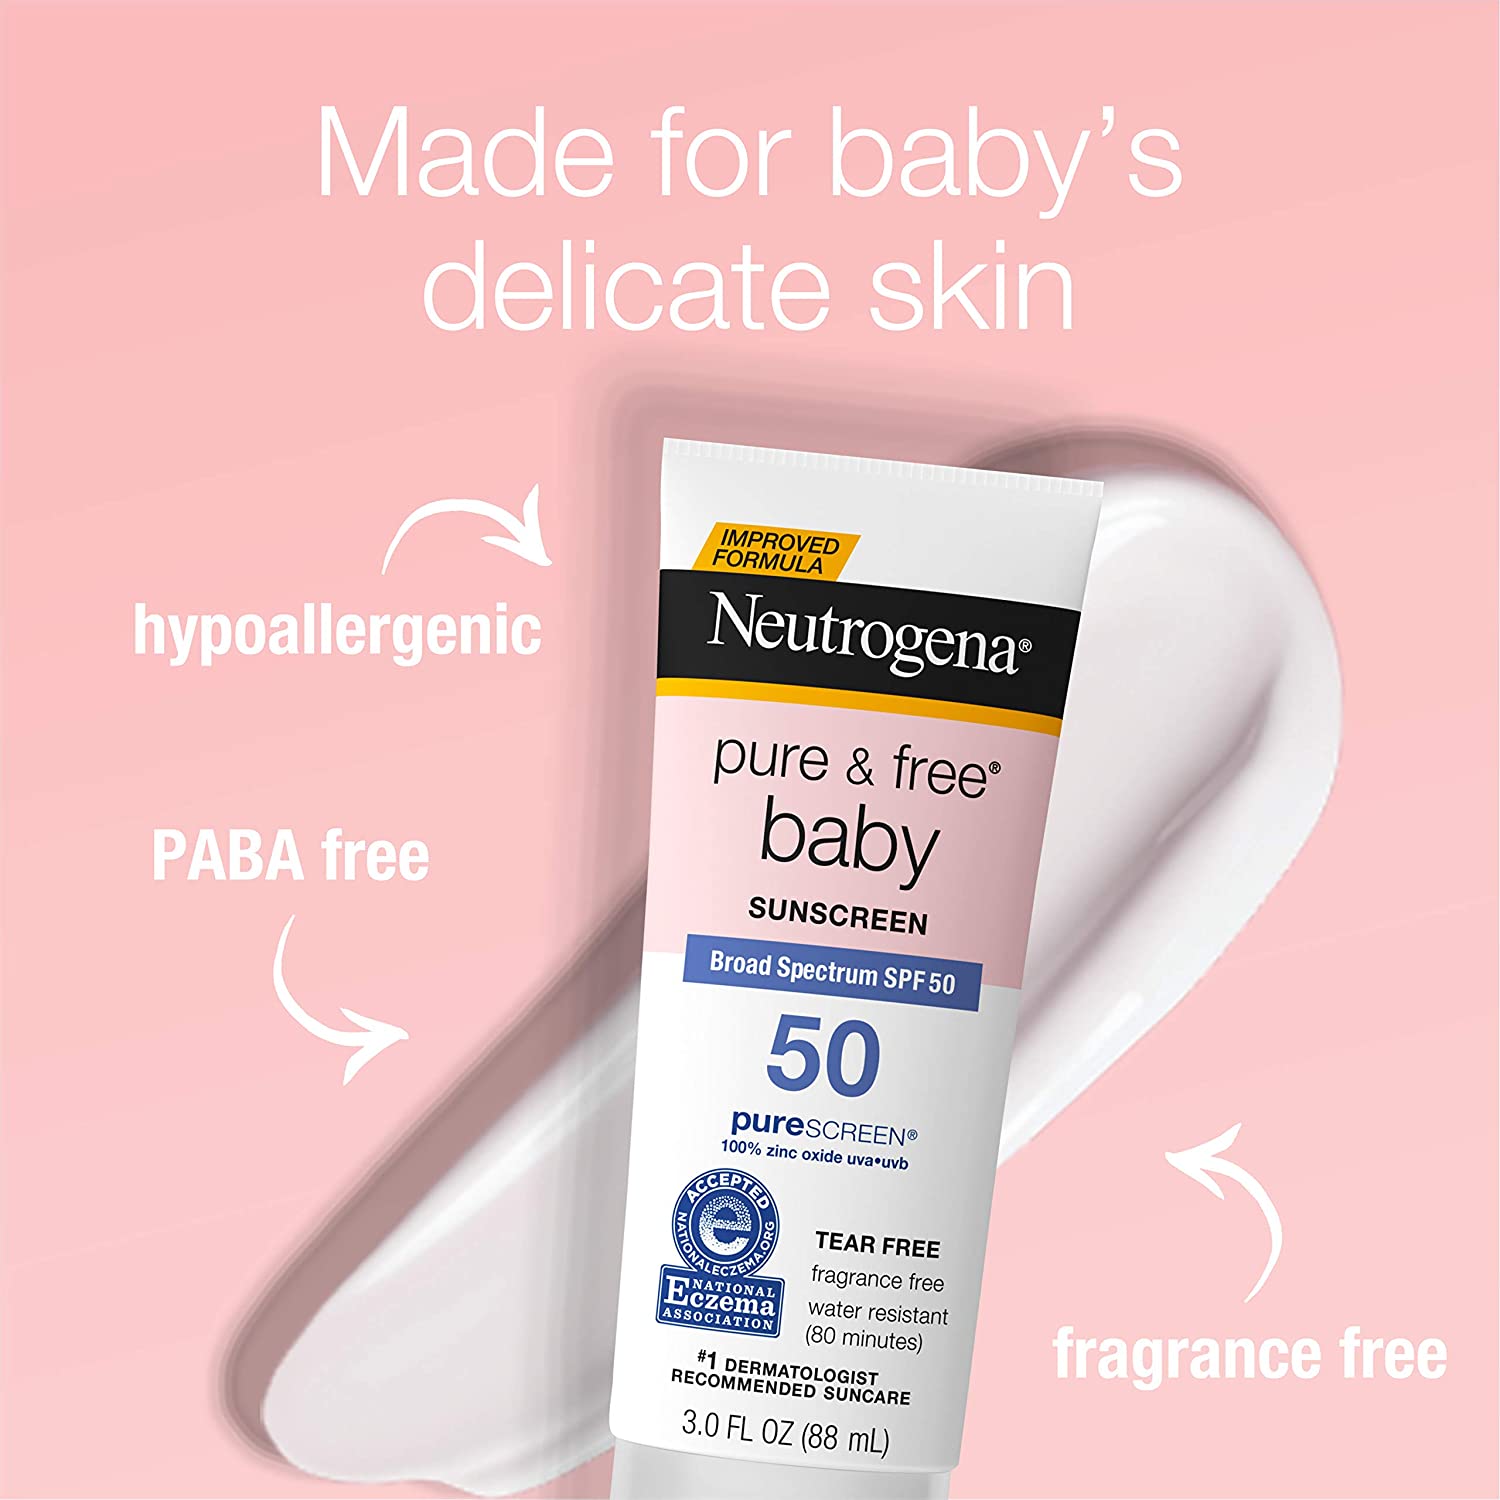 Neutrogena Pure & Free Baby Sunscreen SPF 50